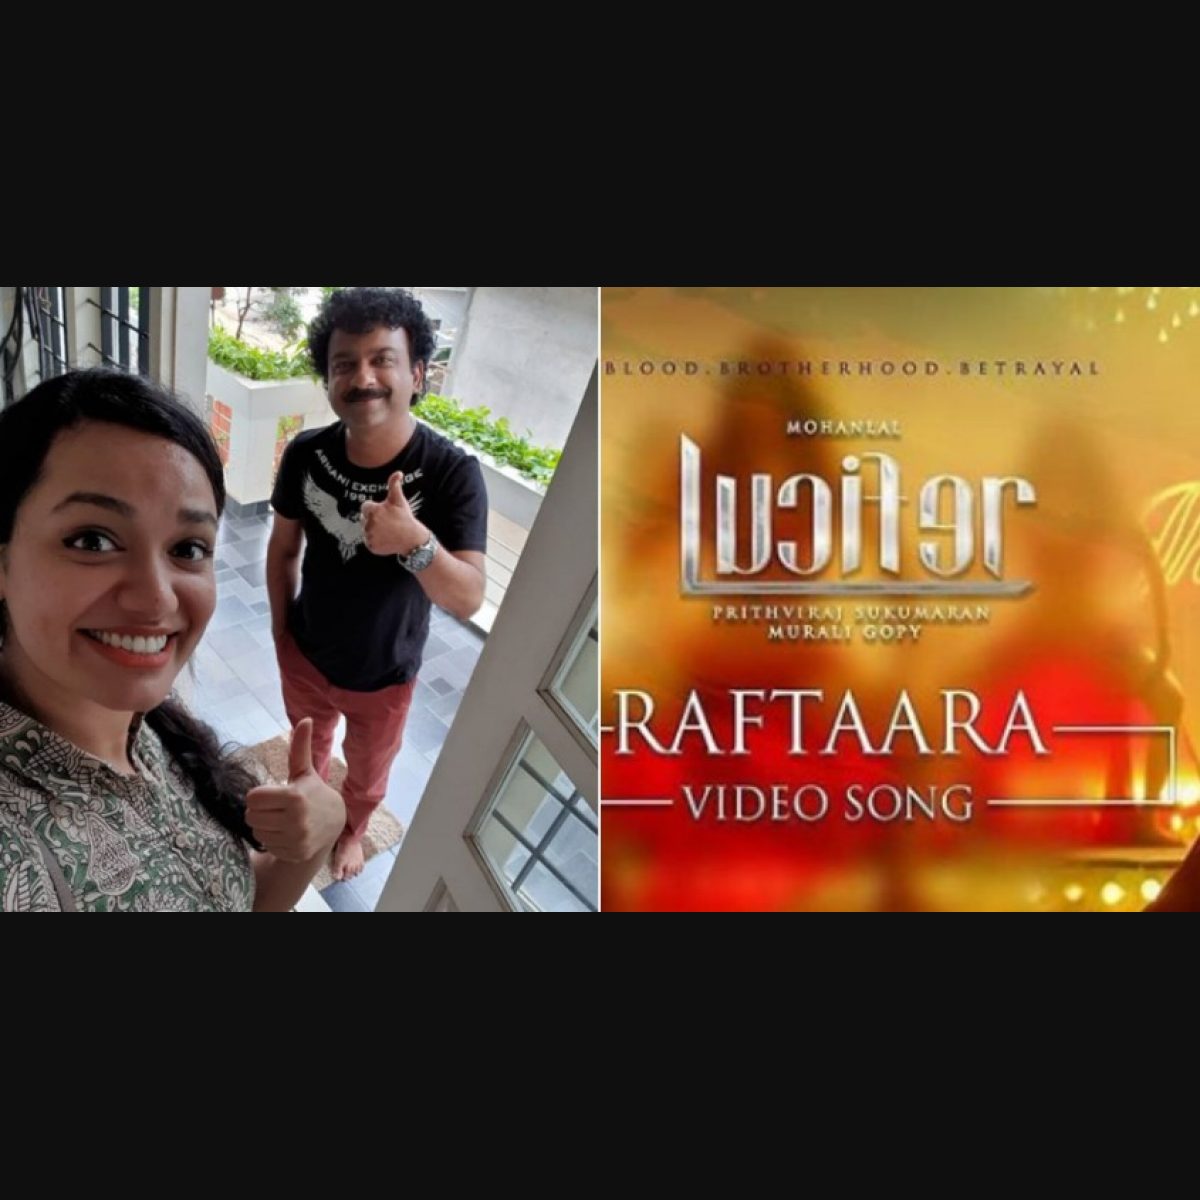 Lucifer: Was the song Raftaara misogynistic? - The Week